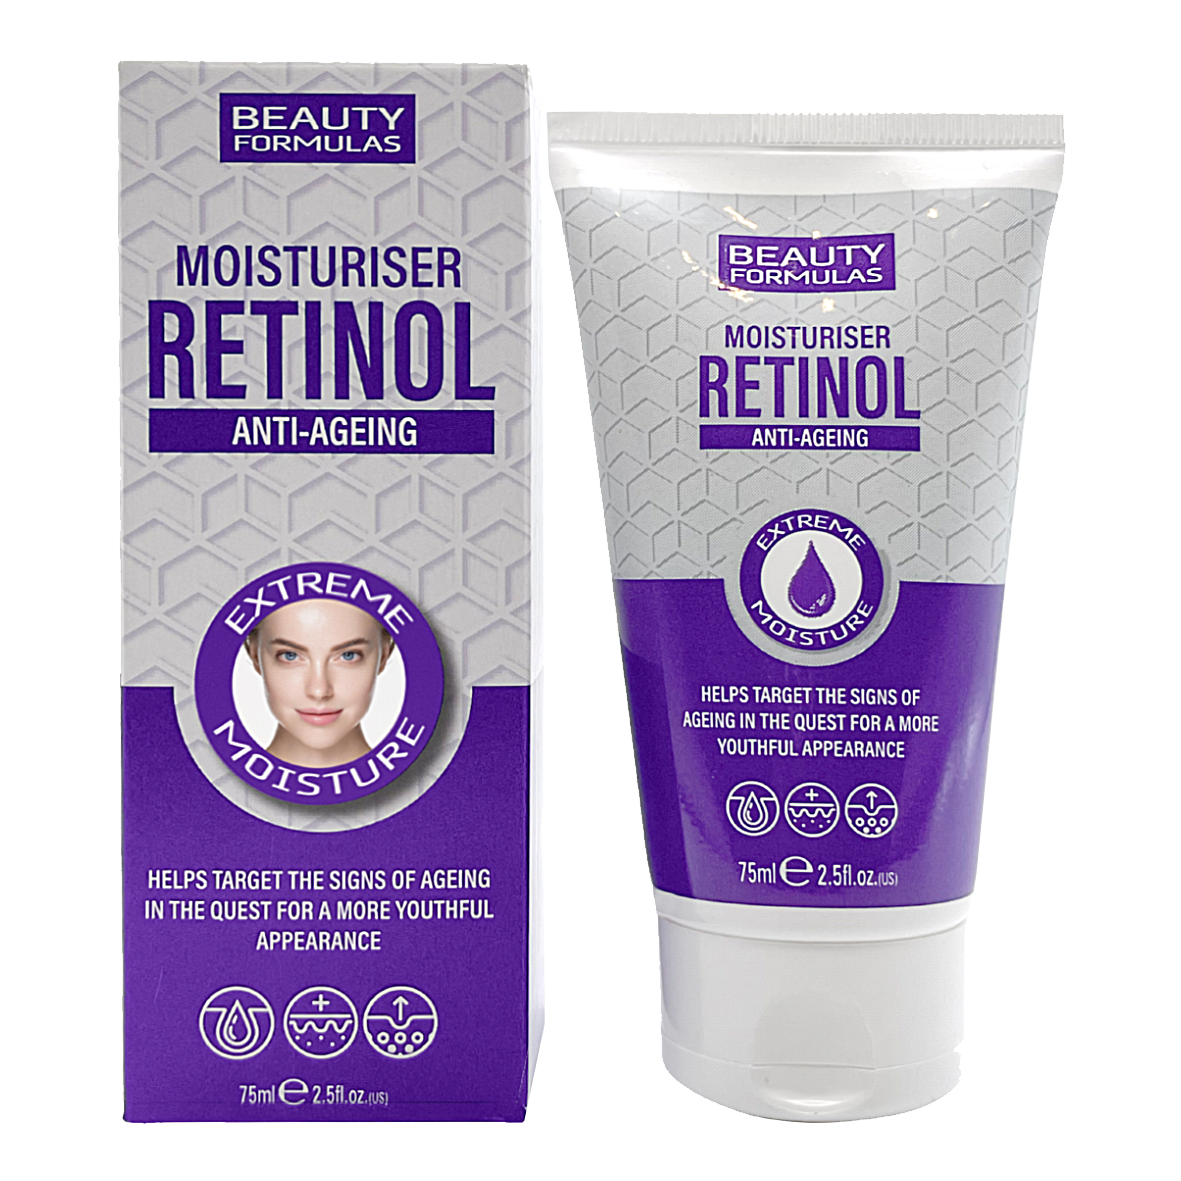 Retinol anti ageing moisturiser.